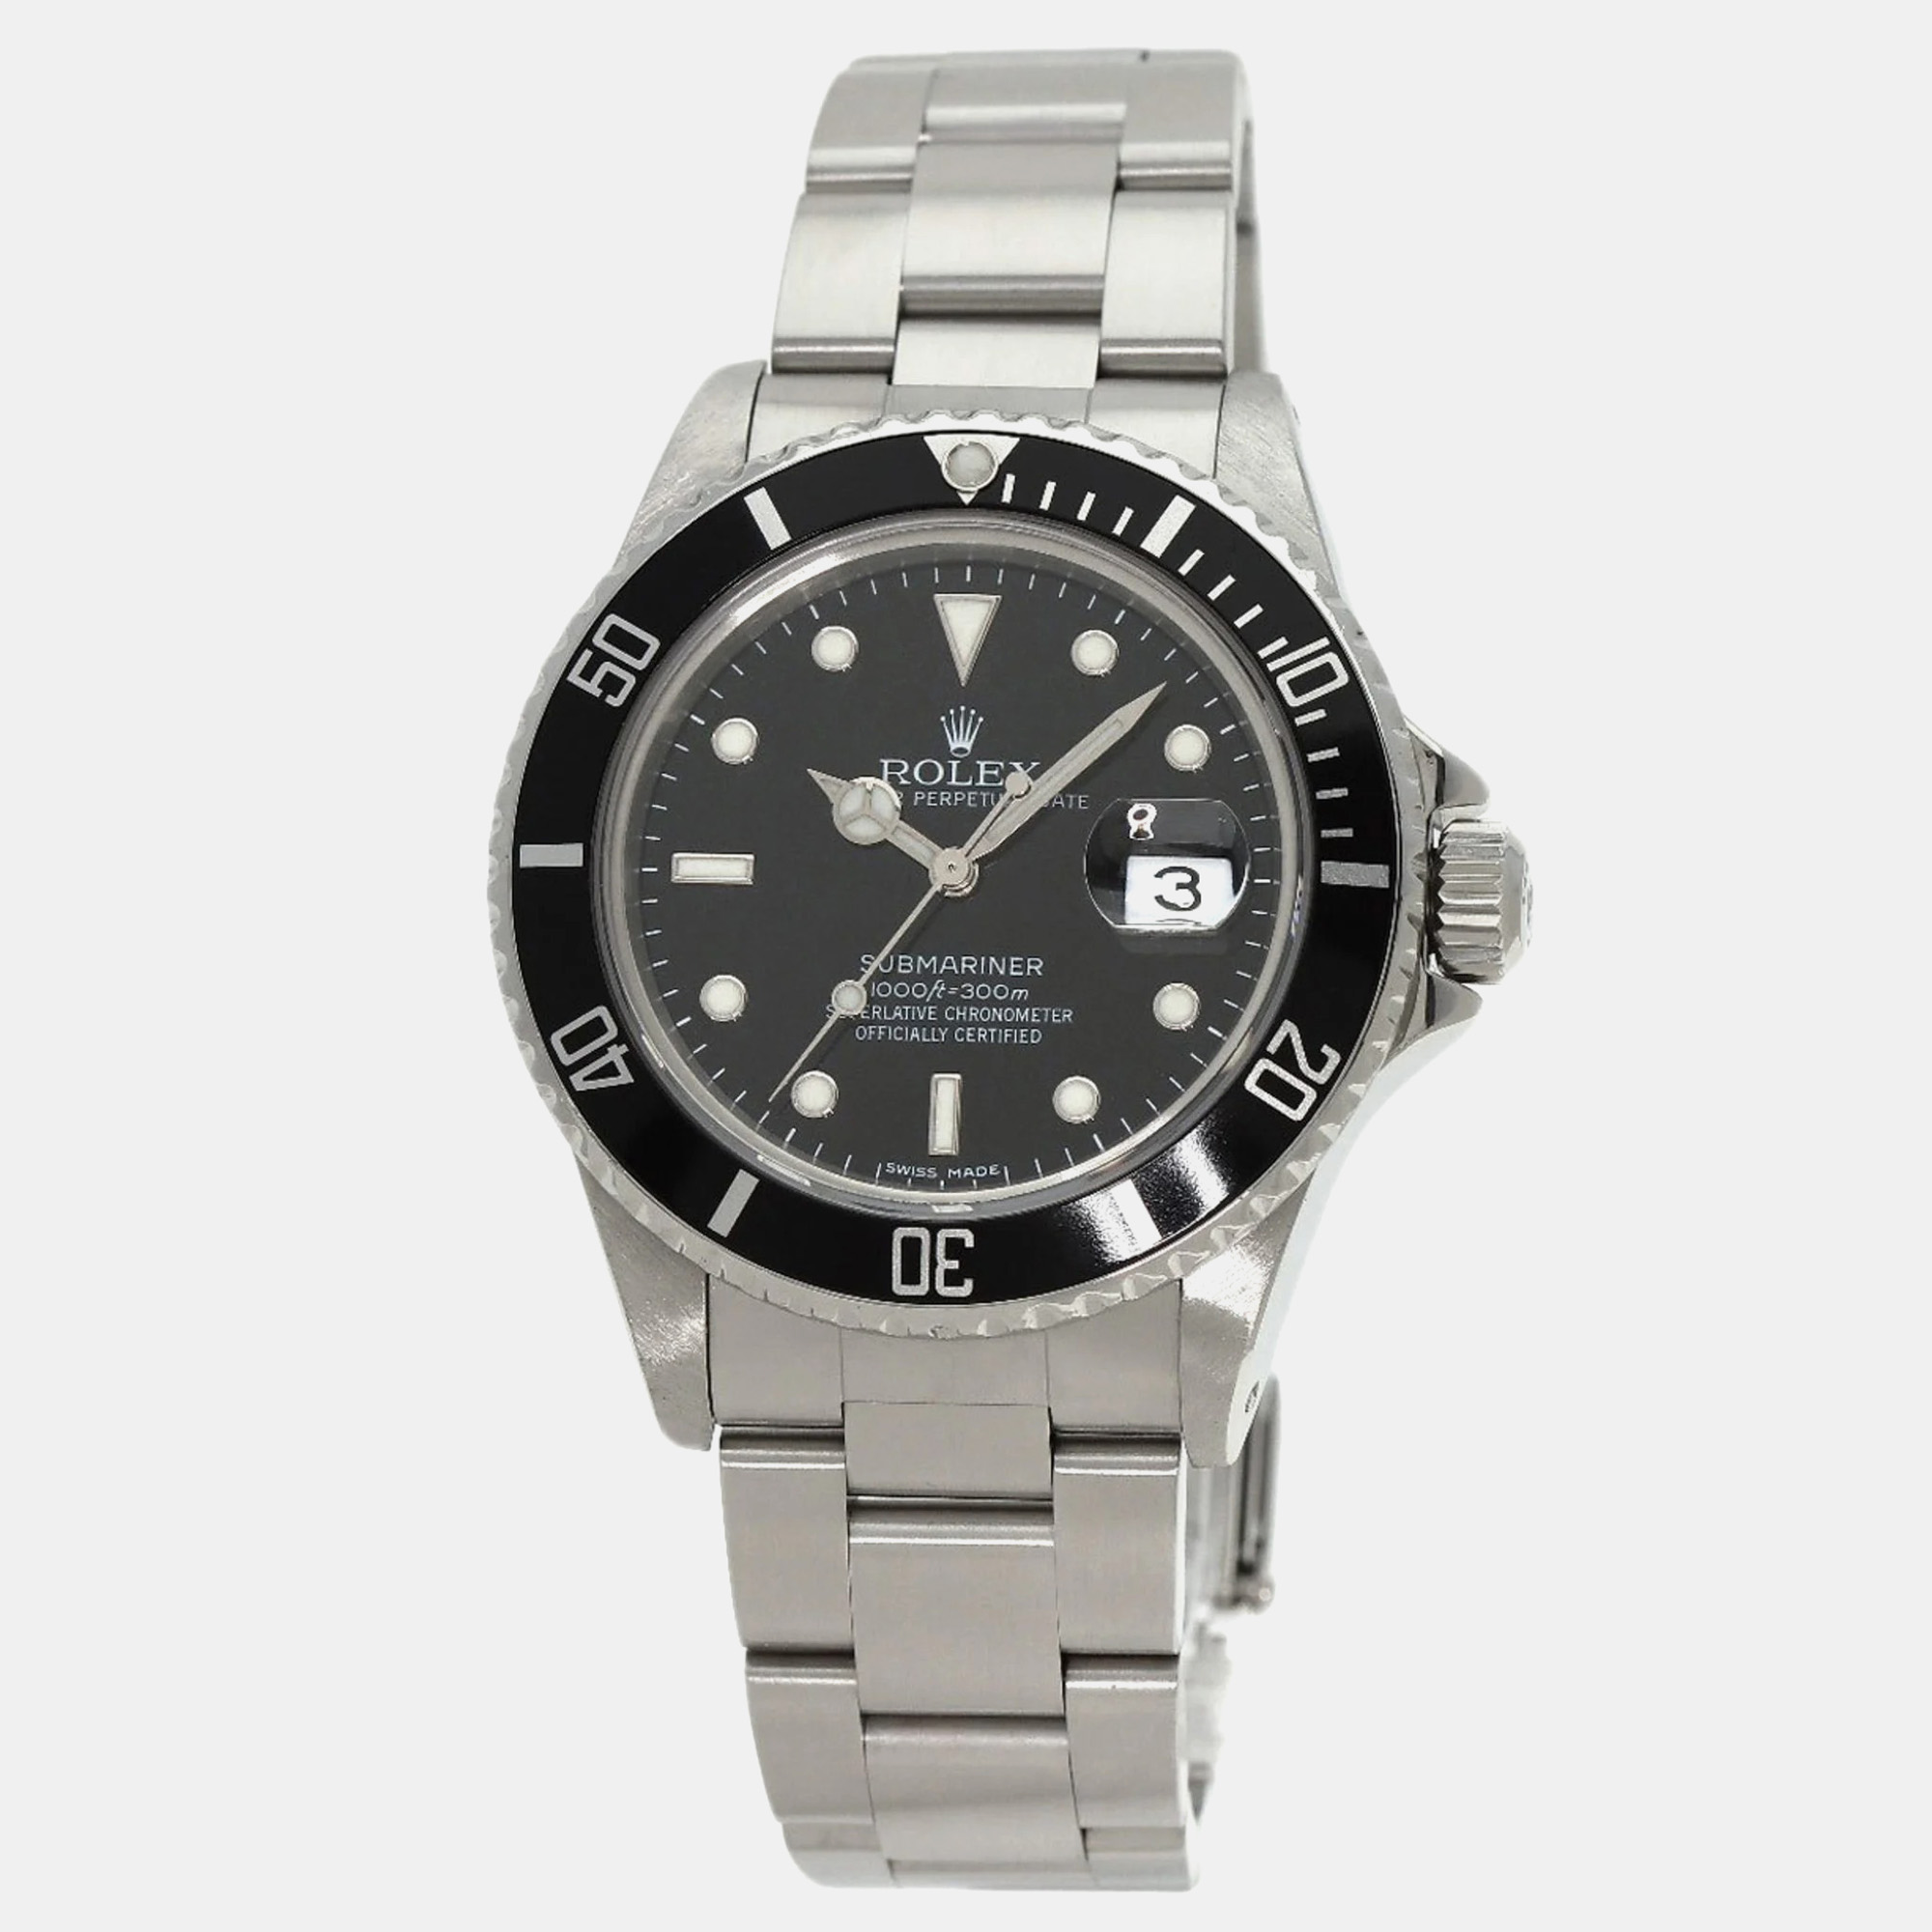 Rolex black stainless steel submariner 16800 automatic men's wristwatch 40 mm